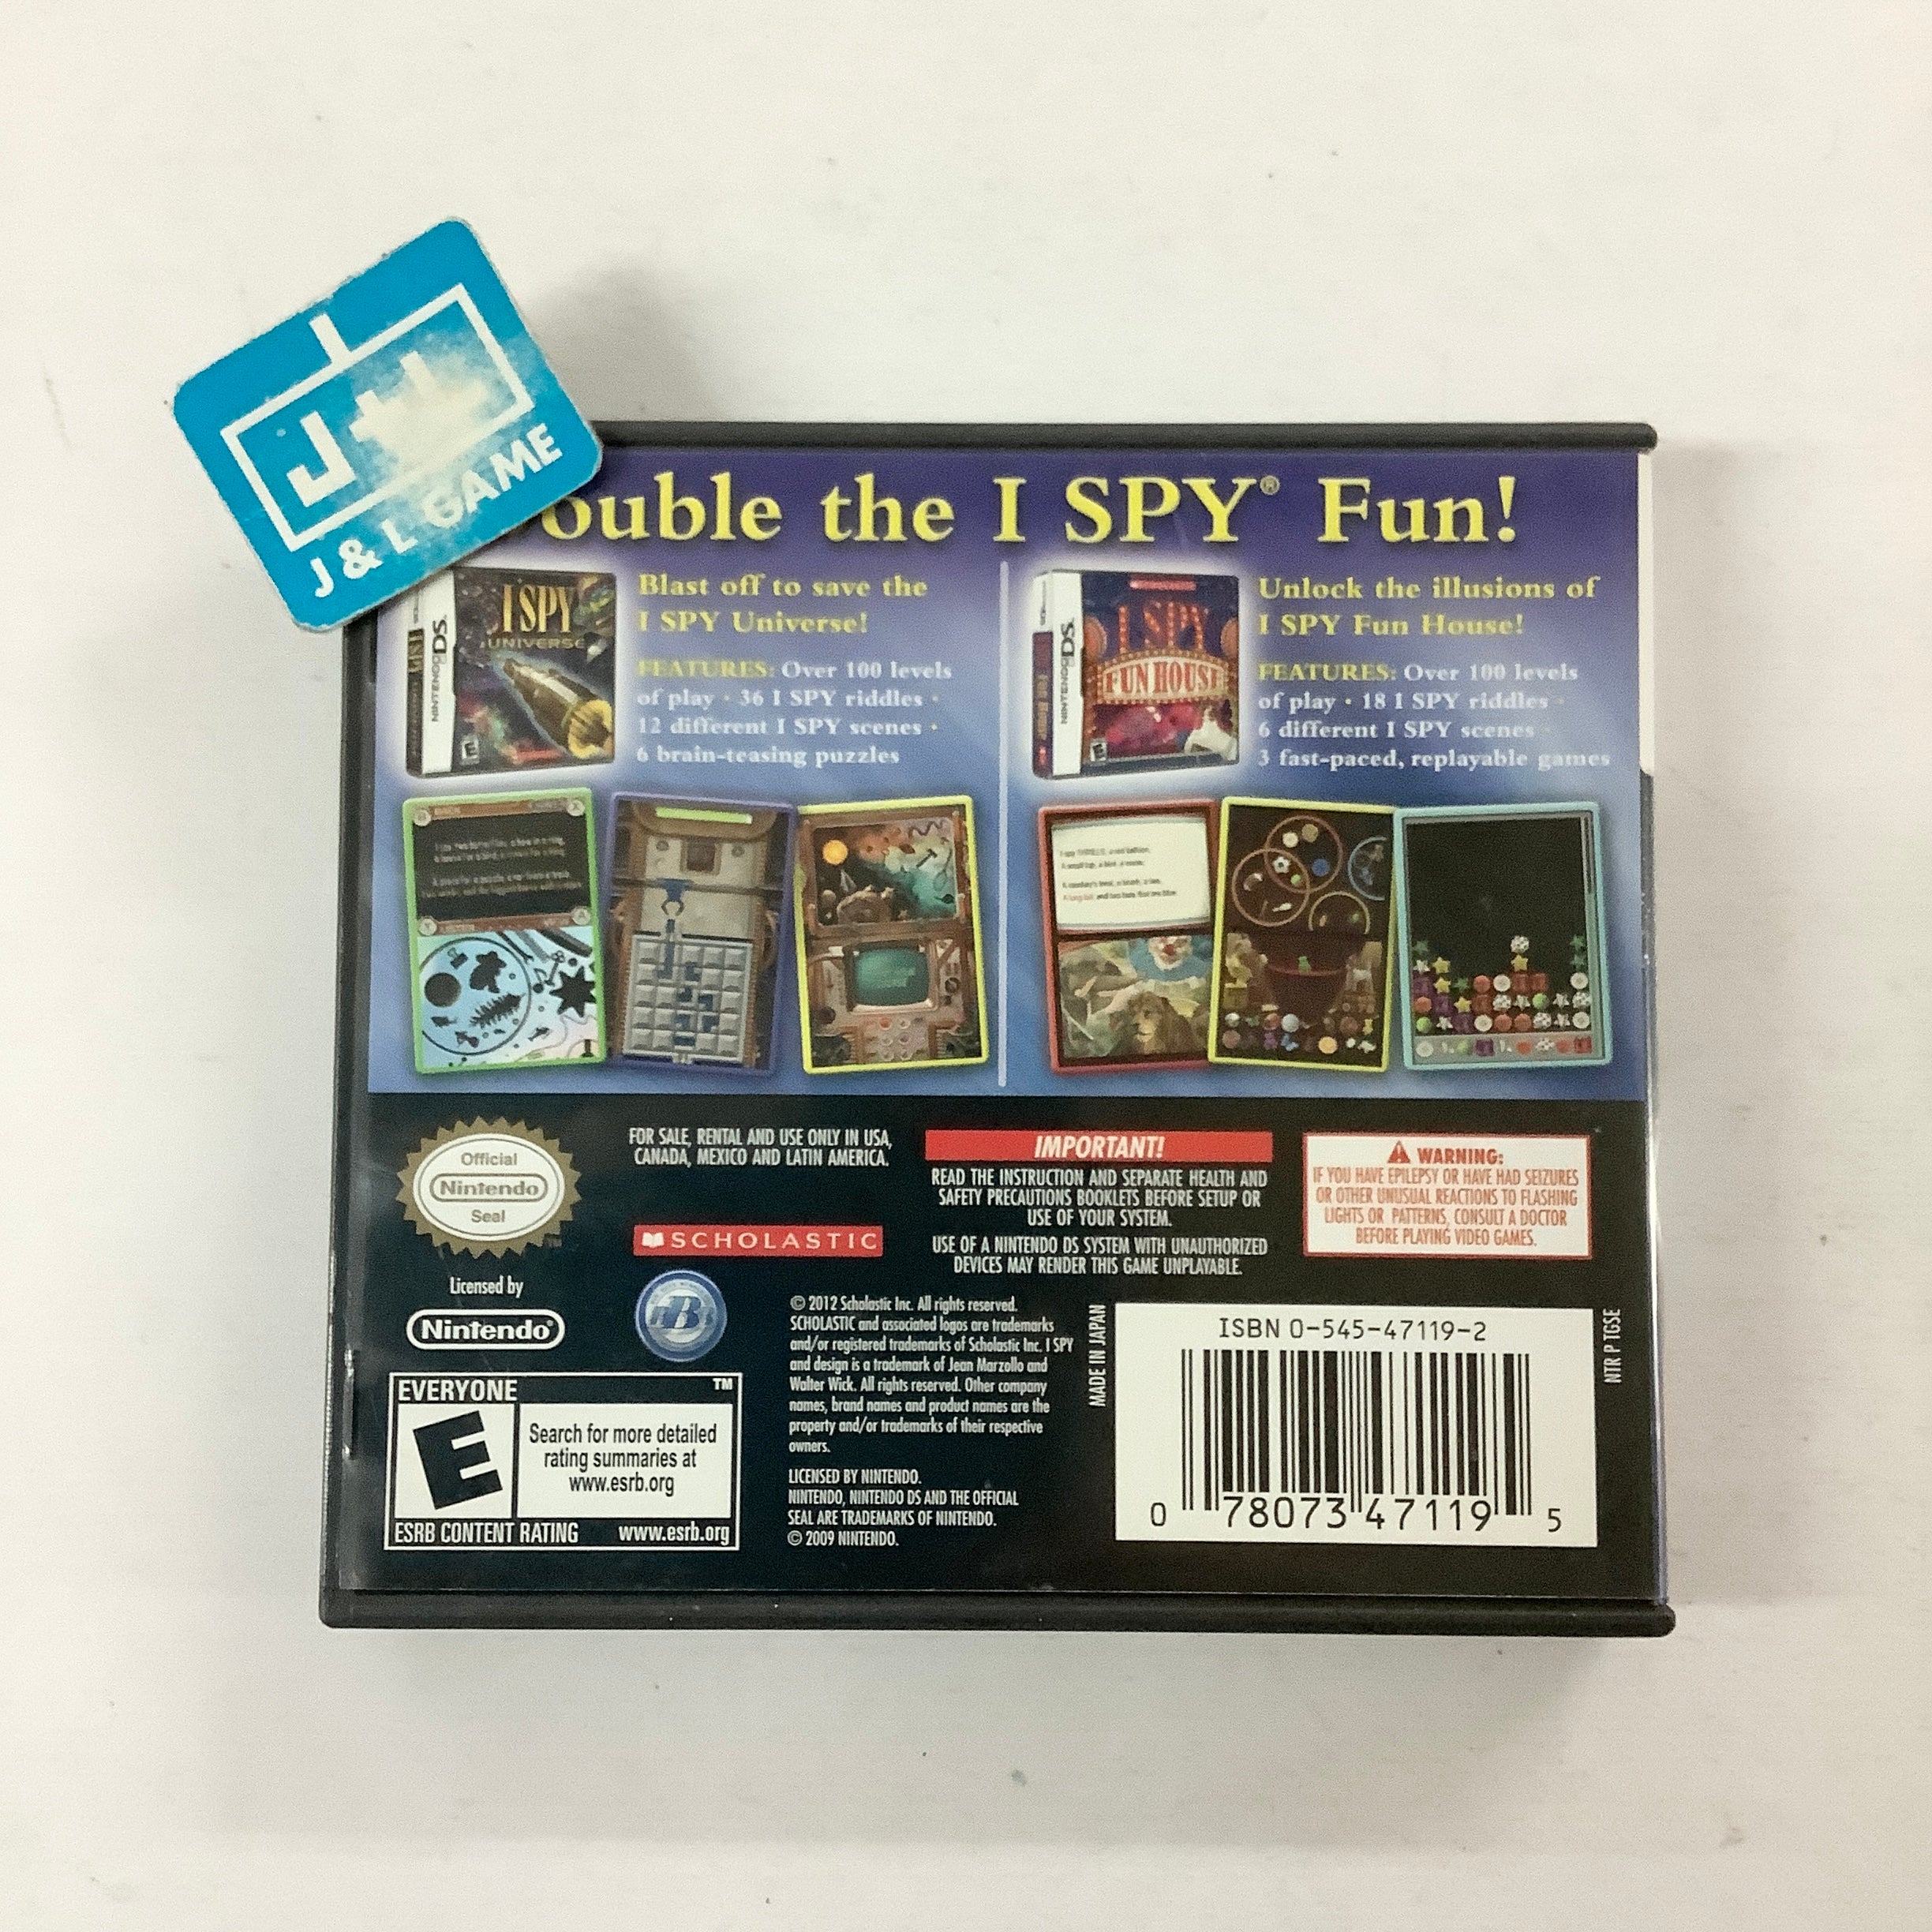 I Spy: Game Pack - I Spy Universe / I Spy Fun House - (NDS) Nintendo DS [Pre-Owned]